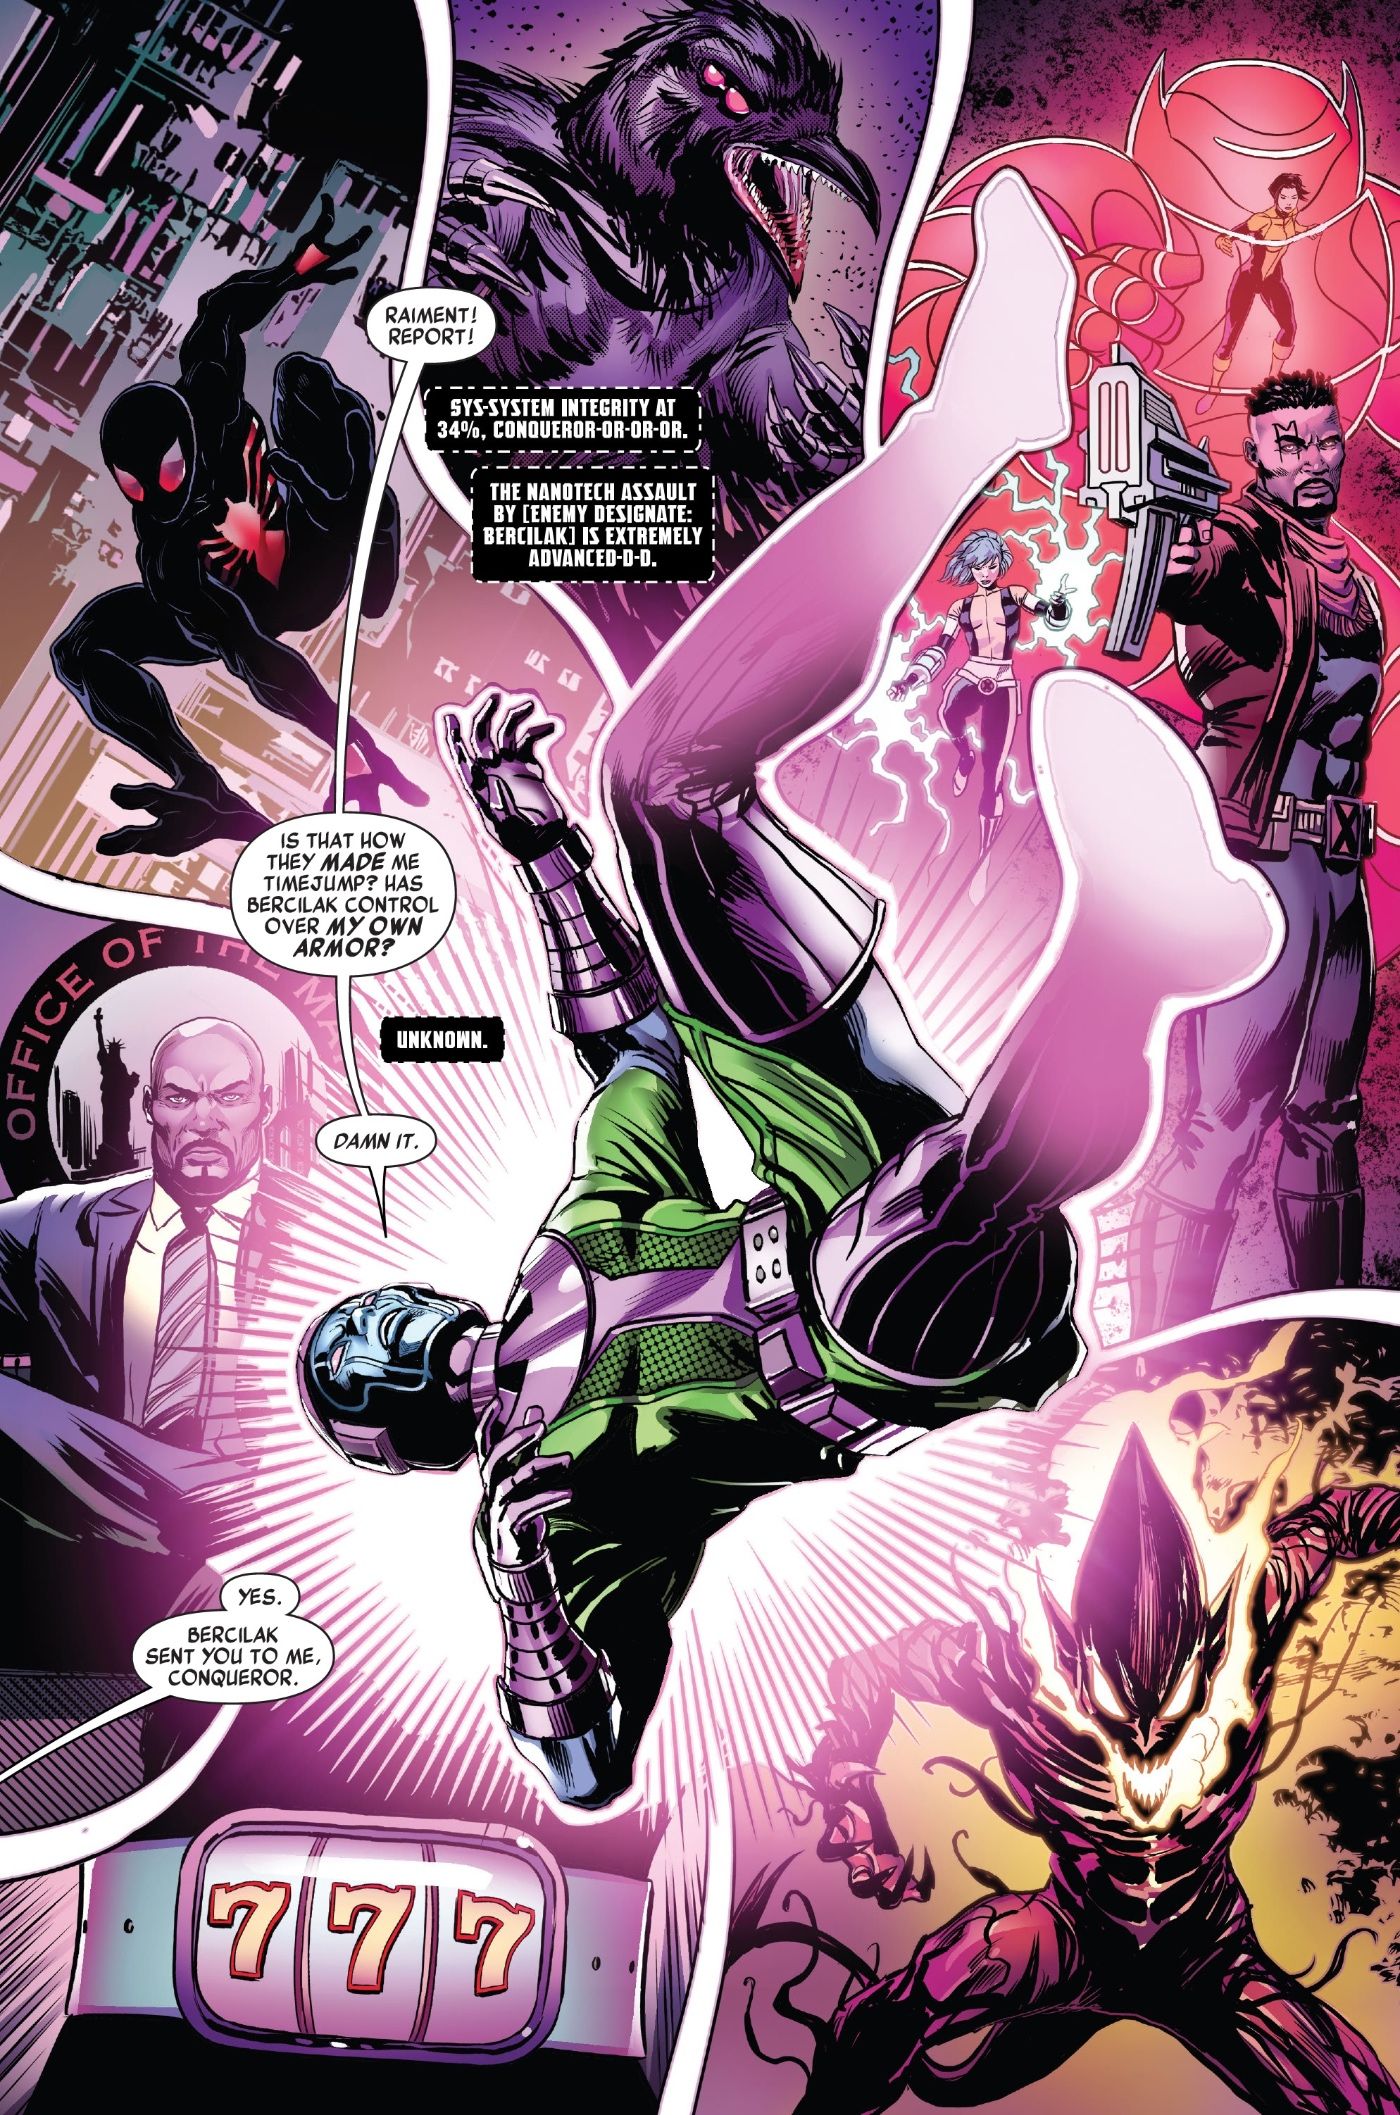 Kang testemunha o futuro da Marvel e o novo Homem-Aranha